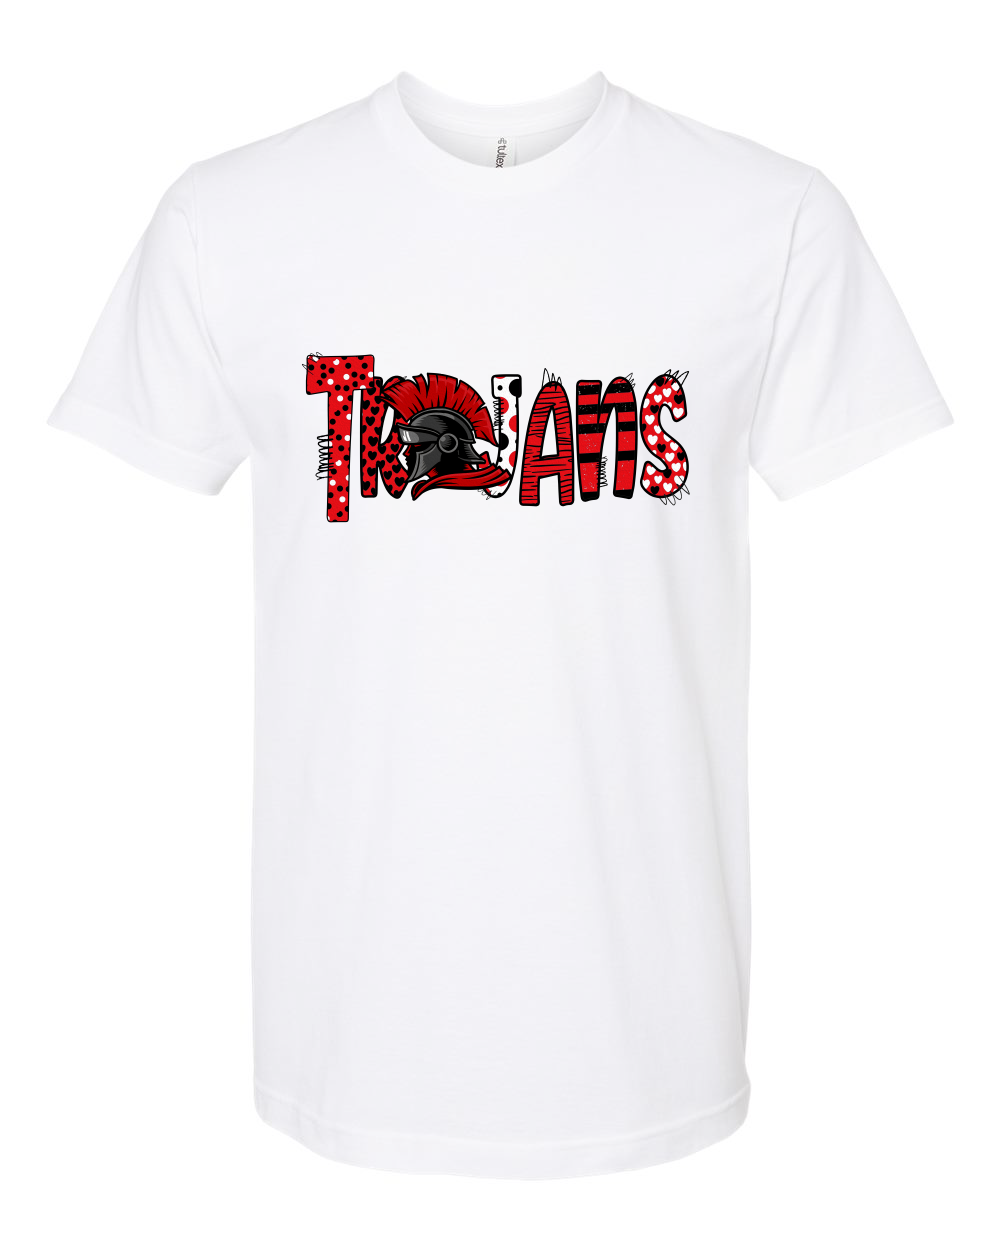 Lady Trojans Shirt